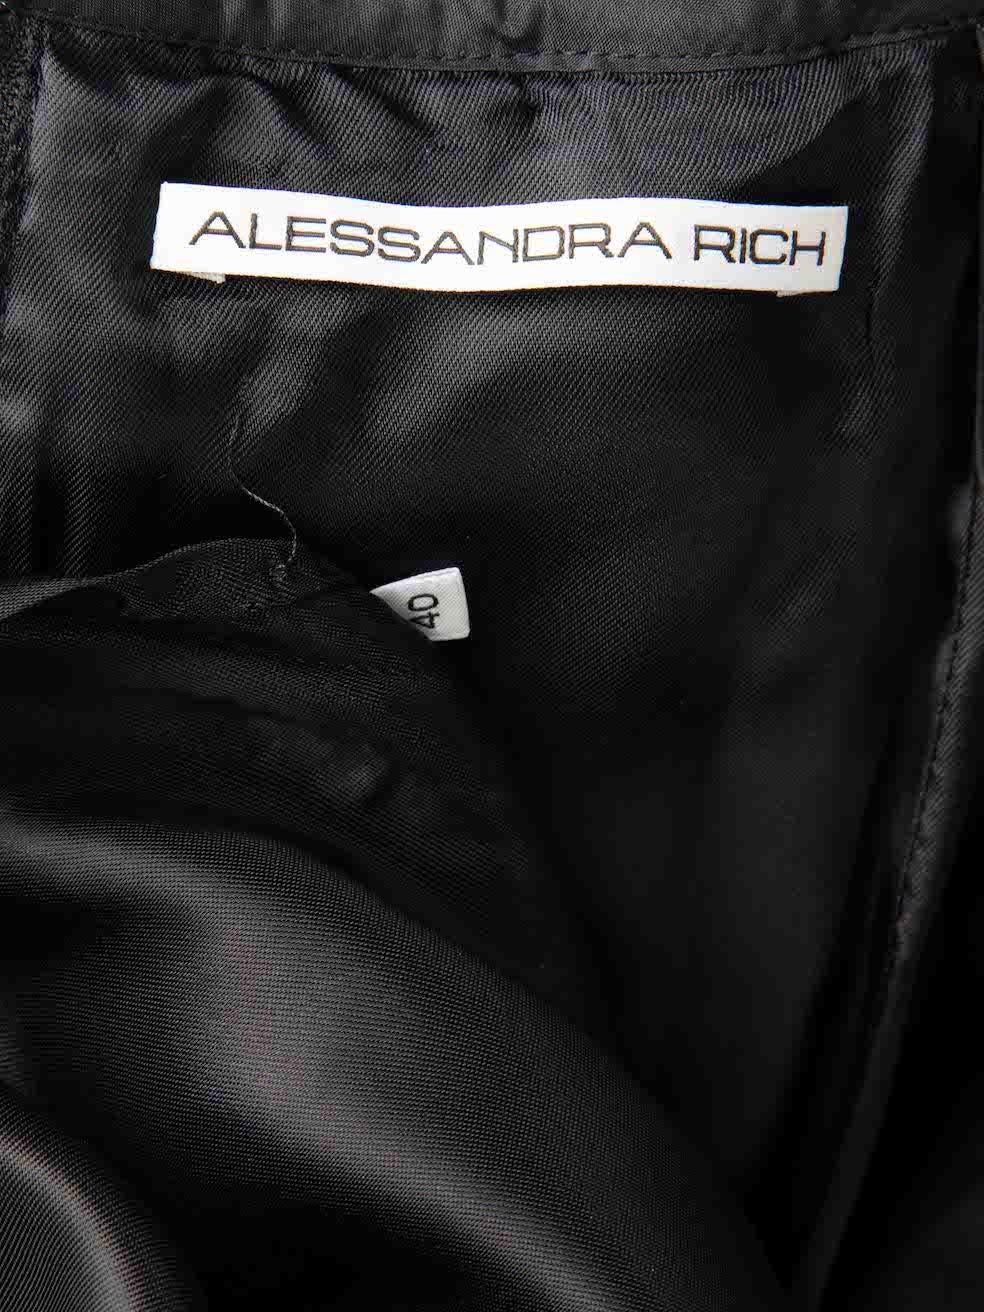 Women's Alessandra Rich Black Pleated Ruffle Trim Dress Size S For Sale